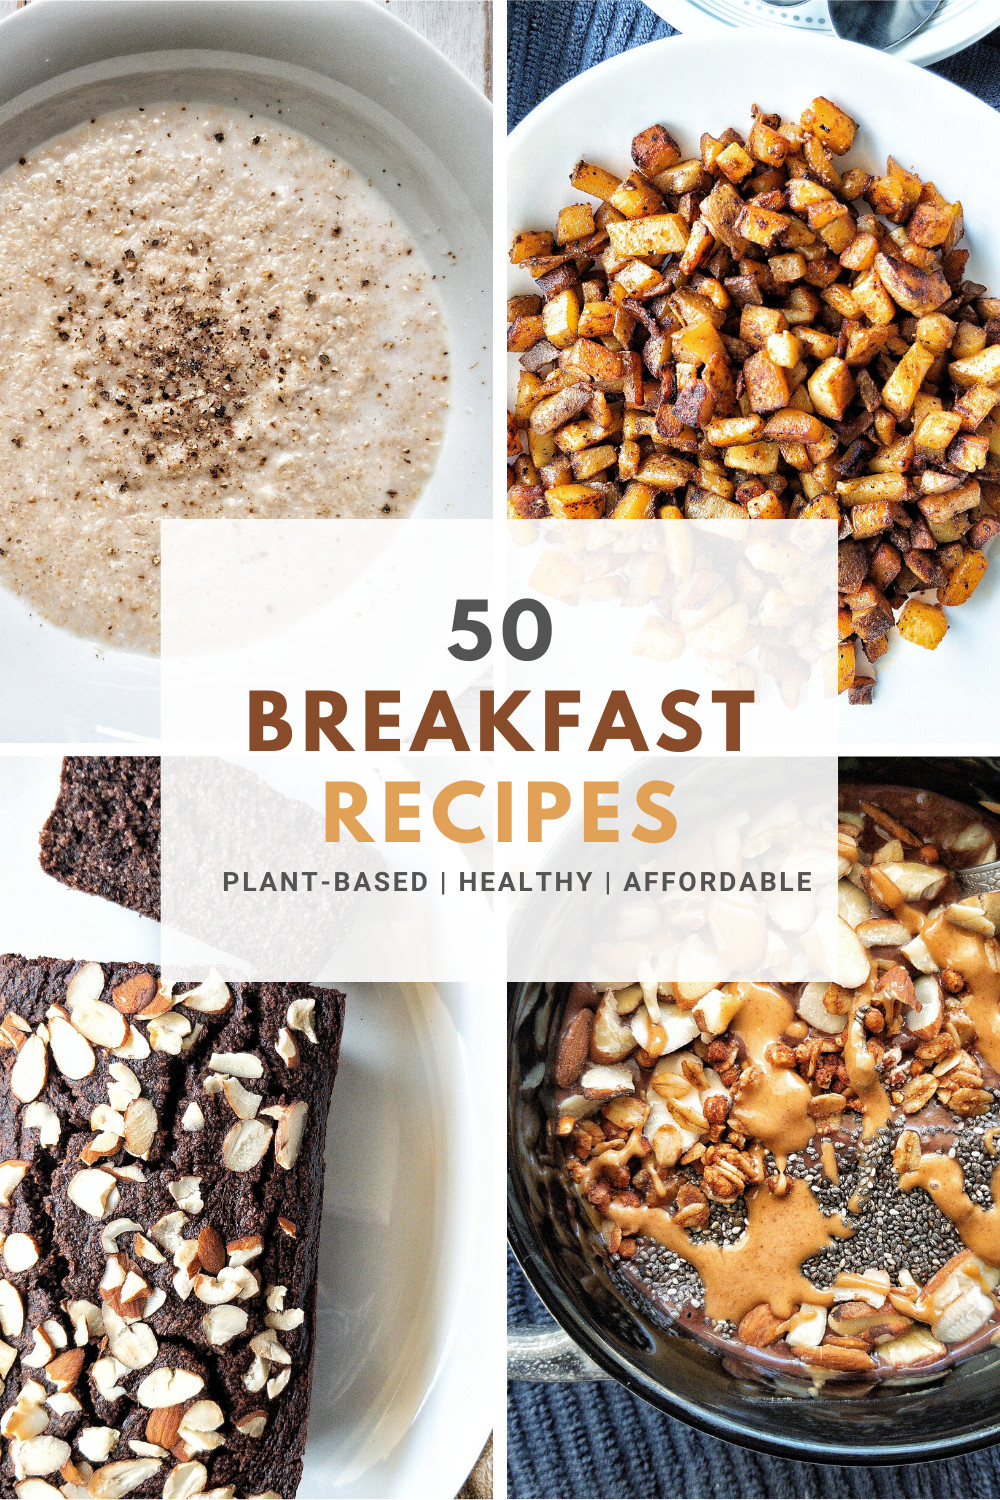 Plant Based Recipes Breakfast
 50 Plant Based Breakfast Recipes in 2020